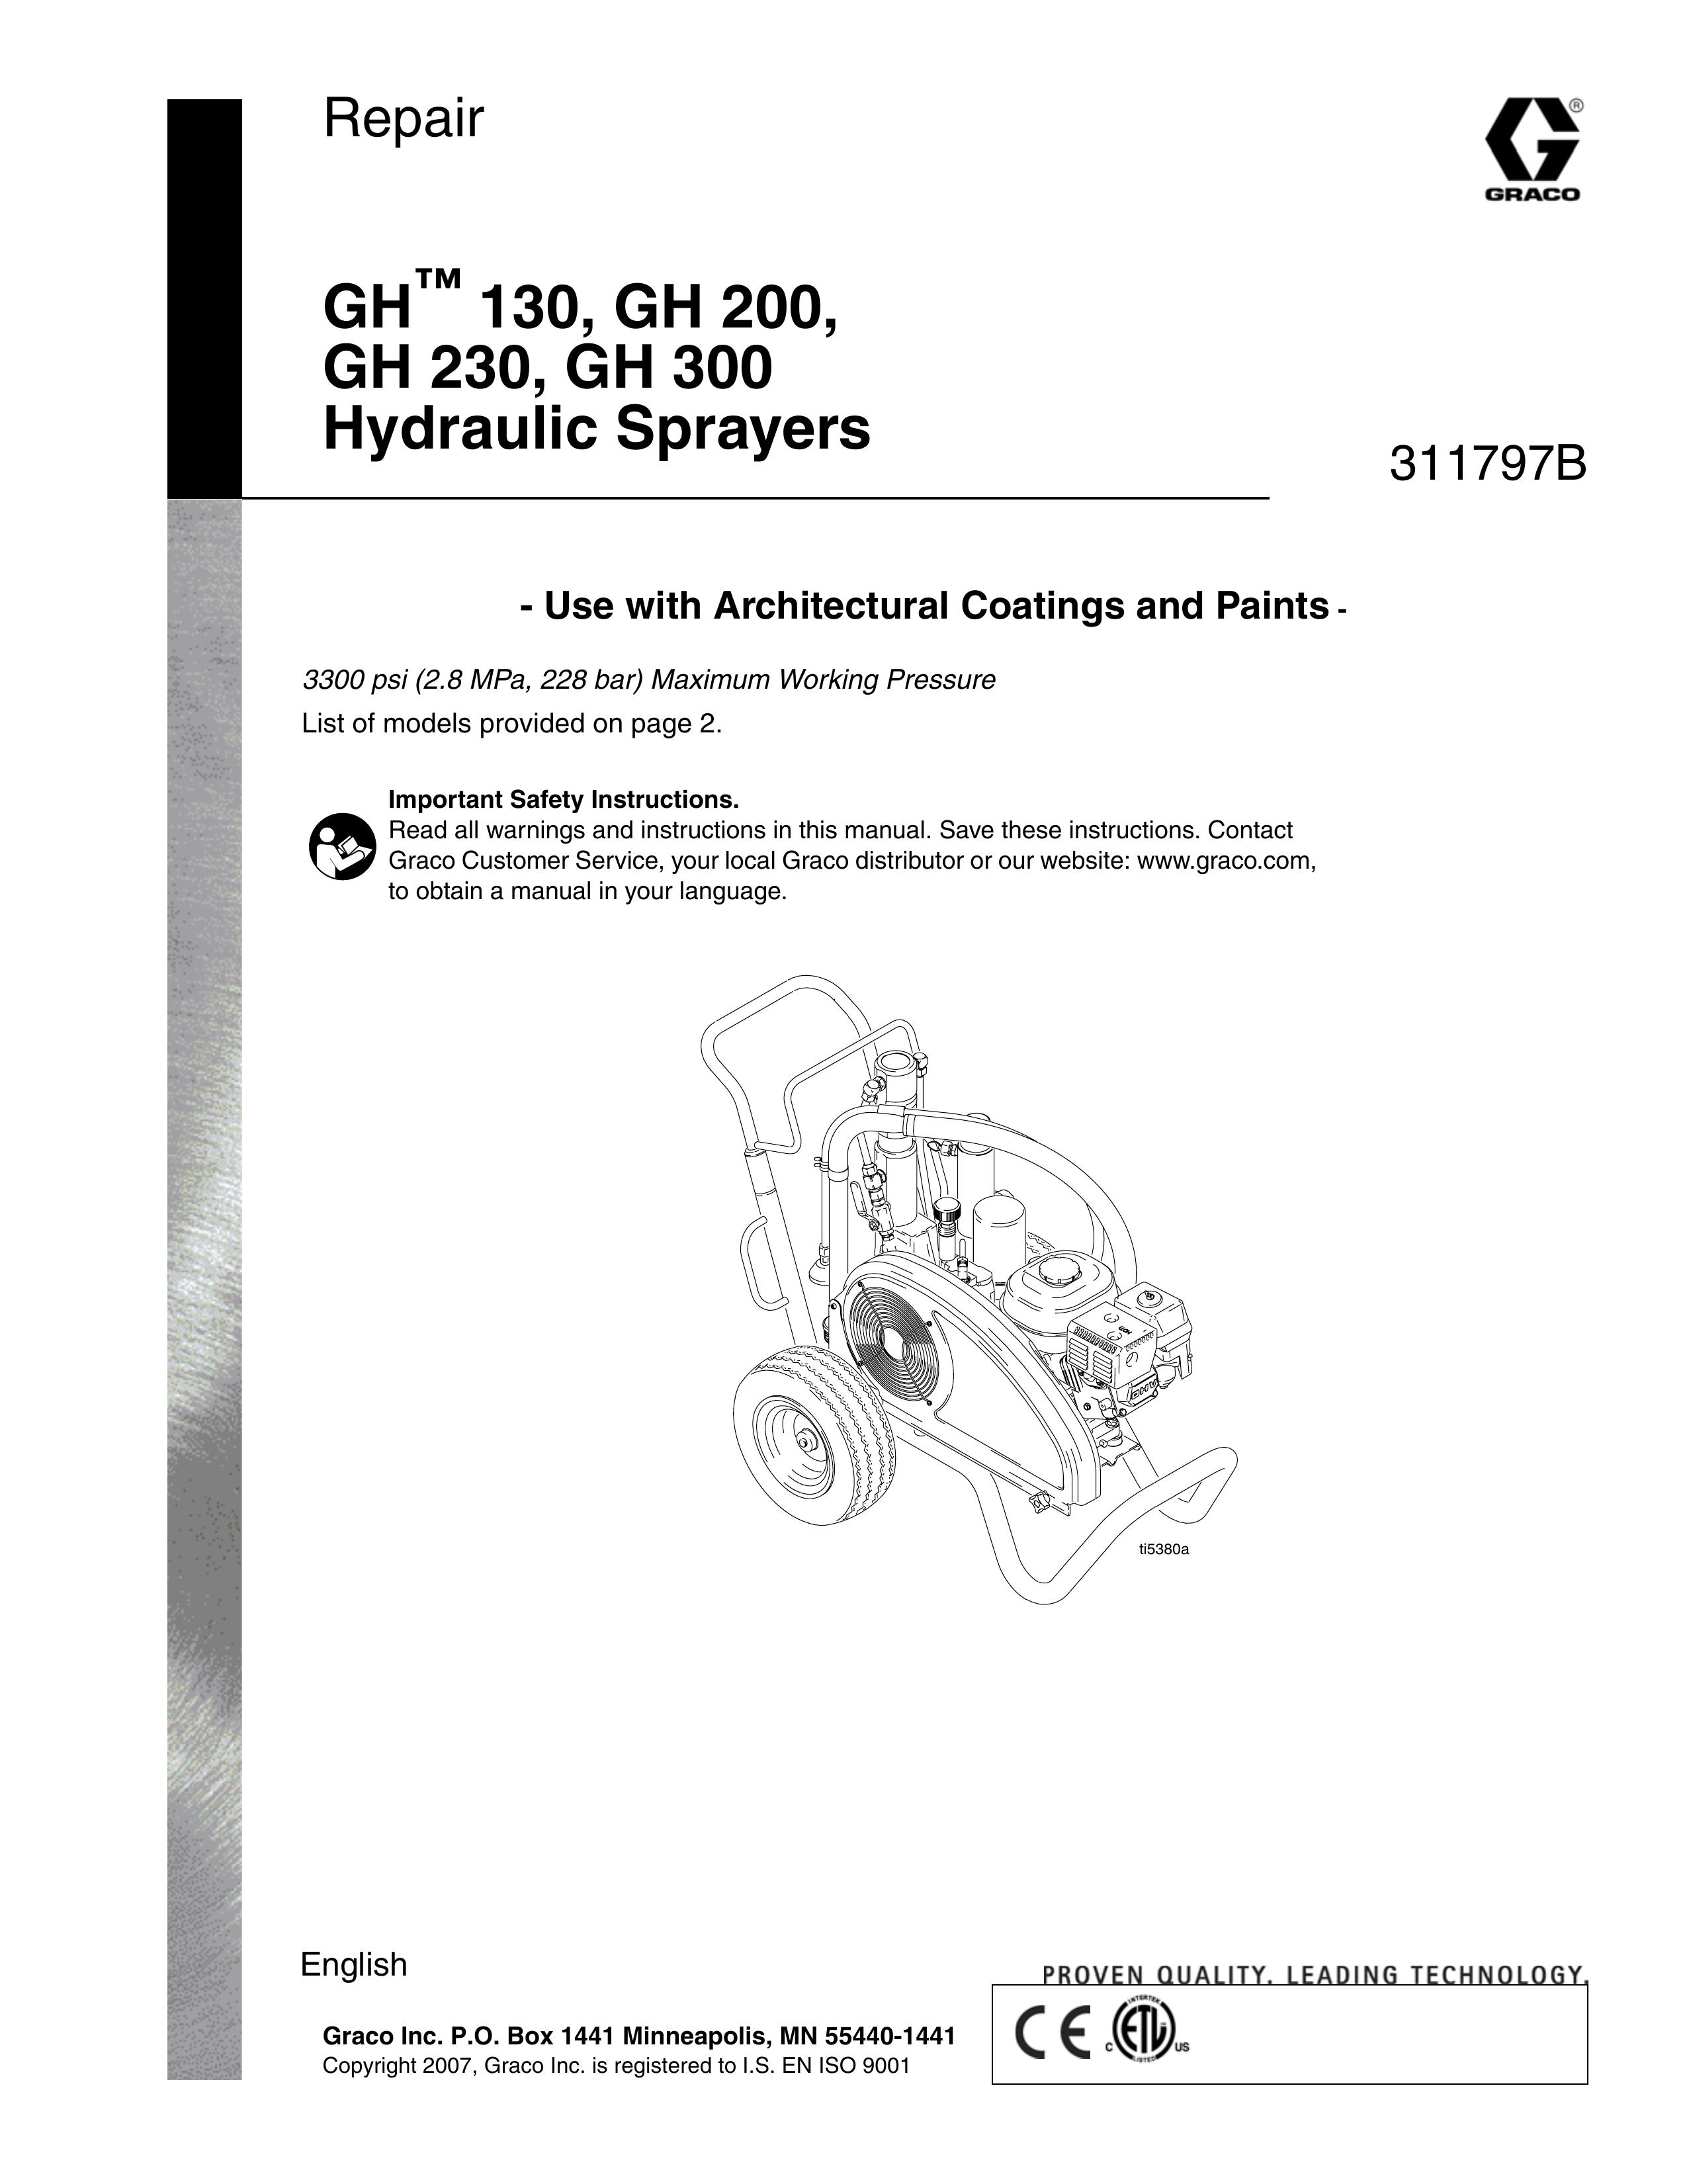 Uniden GH 230 Lawn Mower Accessory User Manual